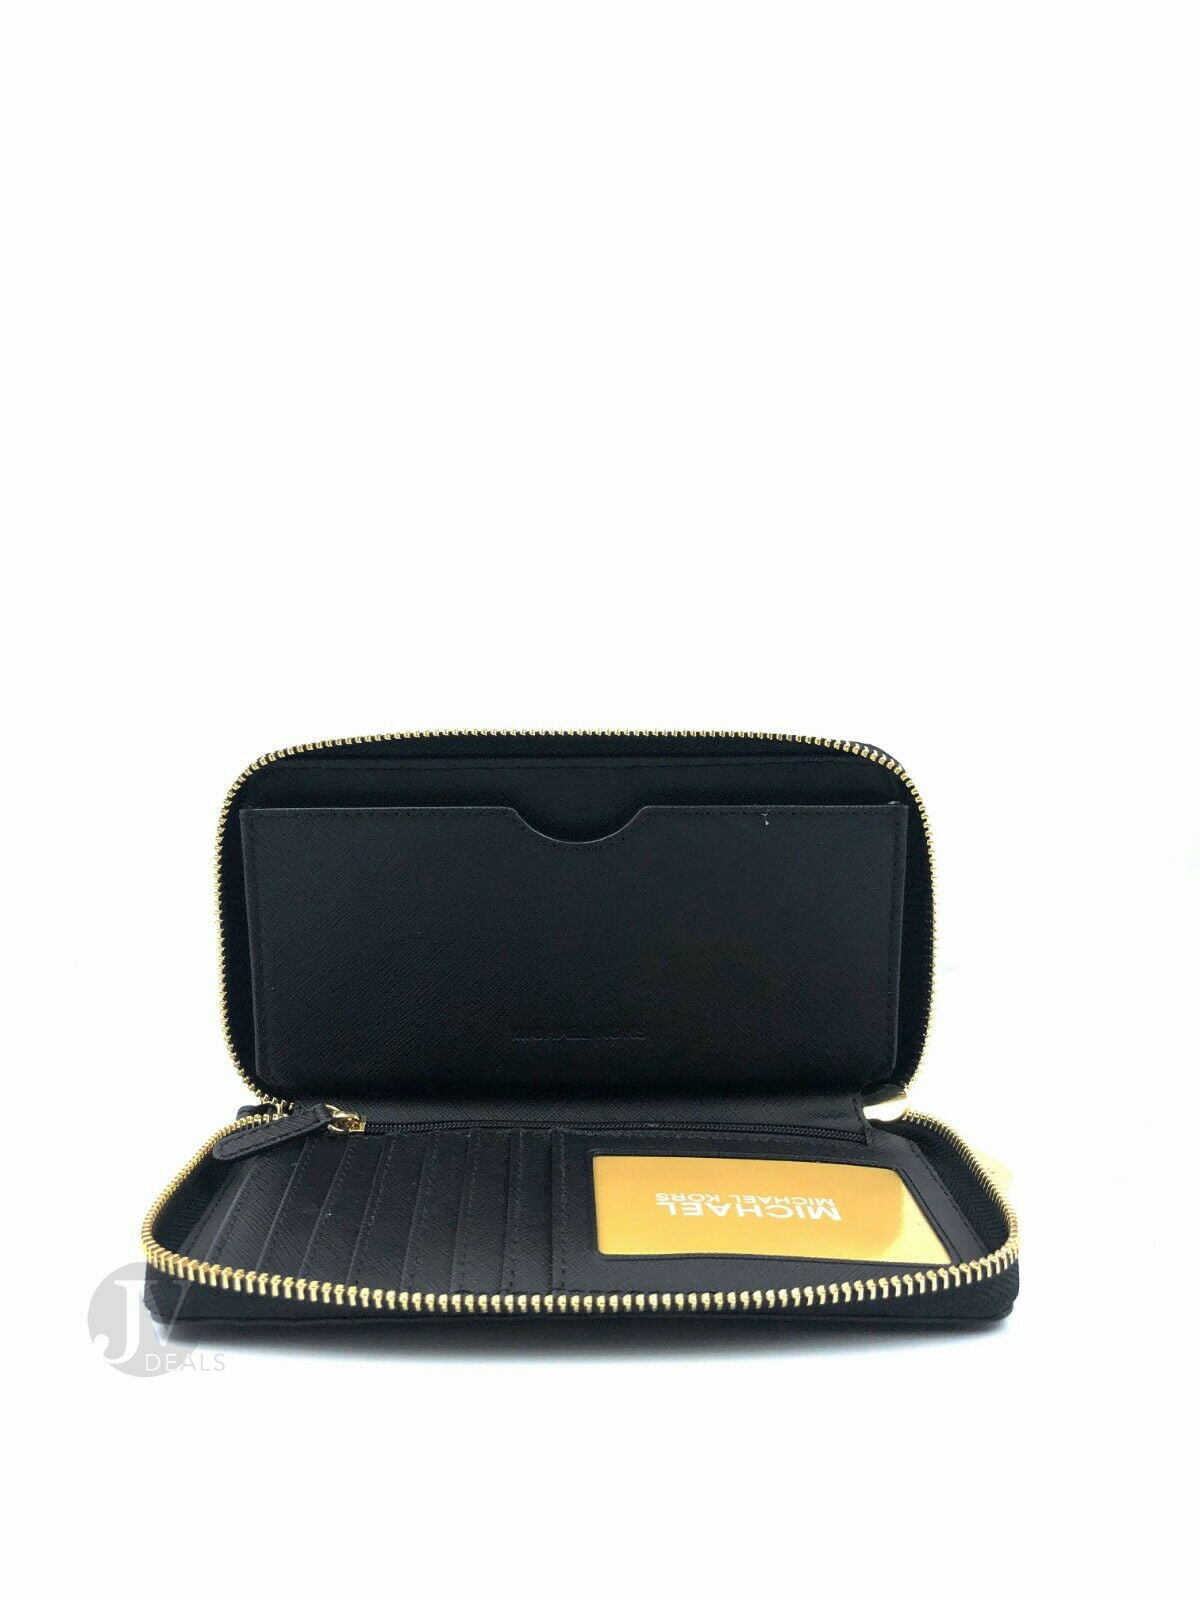 Michael Kors Jet Set Travel Large Smartphone Wristlet - Luggage  32H4GTVE9L-230 888235862835 - Handbags, Jet Set - Jomashop